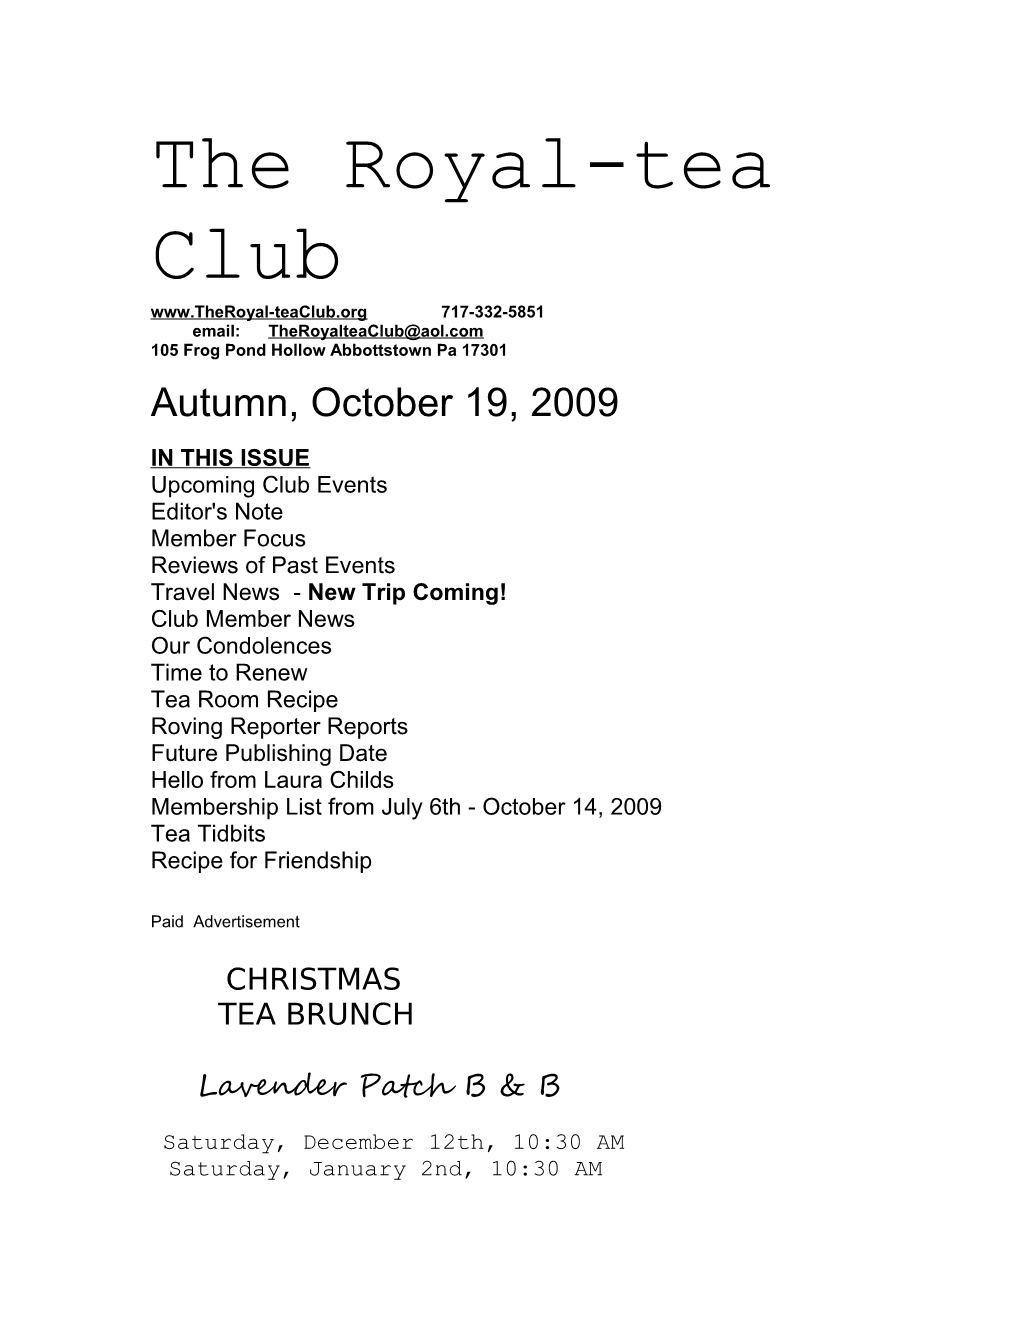 The Royal-Tea Club